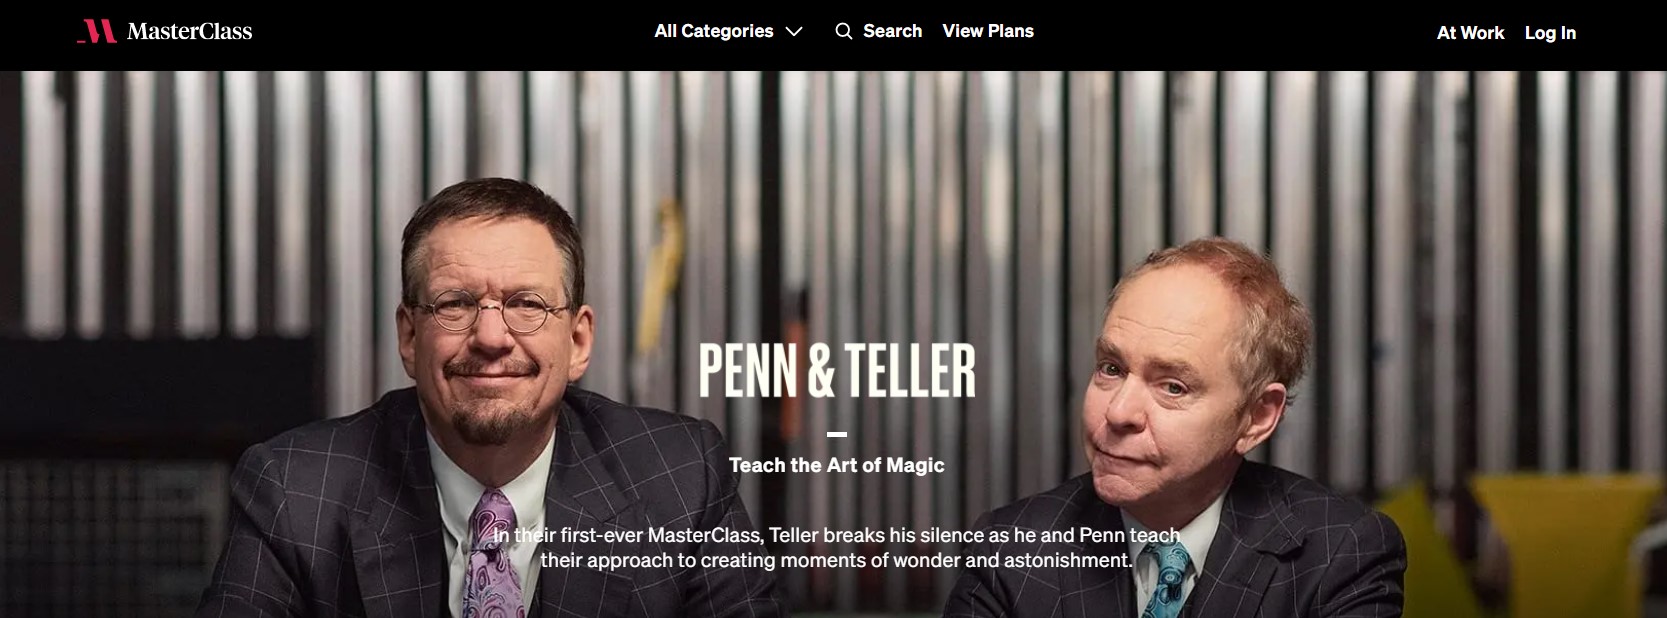 Penn and Teller teach the Art of Magic